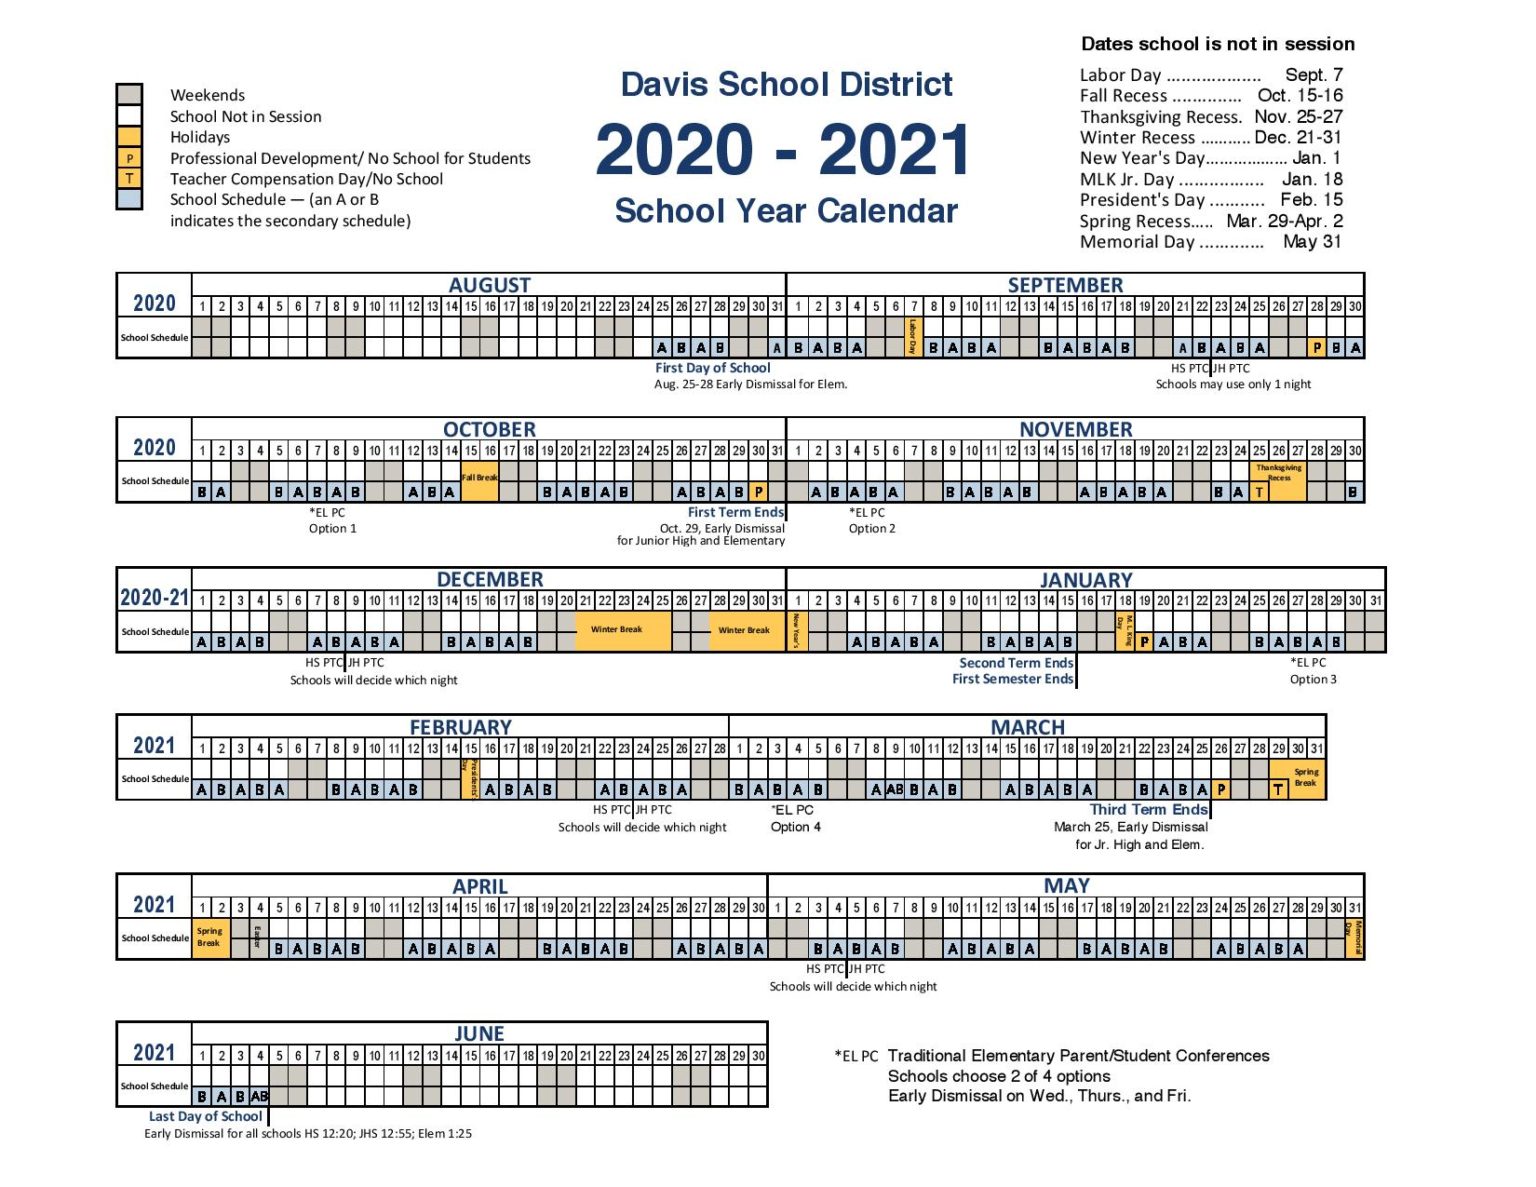 Davis School District Calendar 20202021 in PDF Format